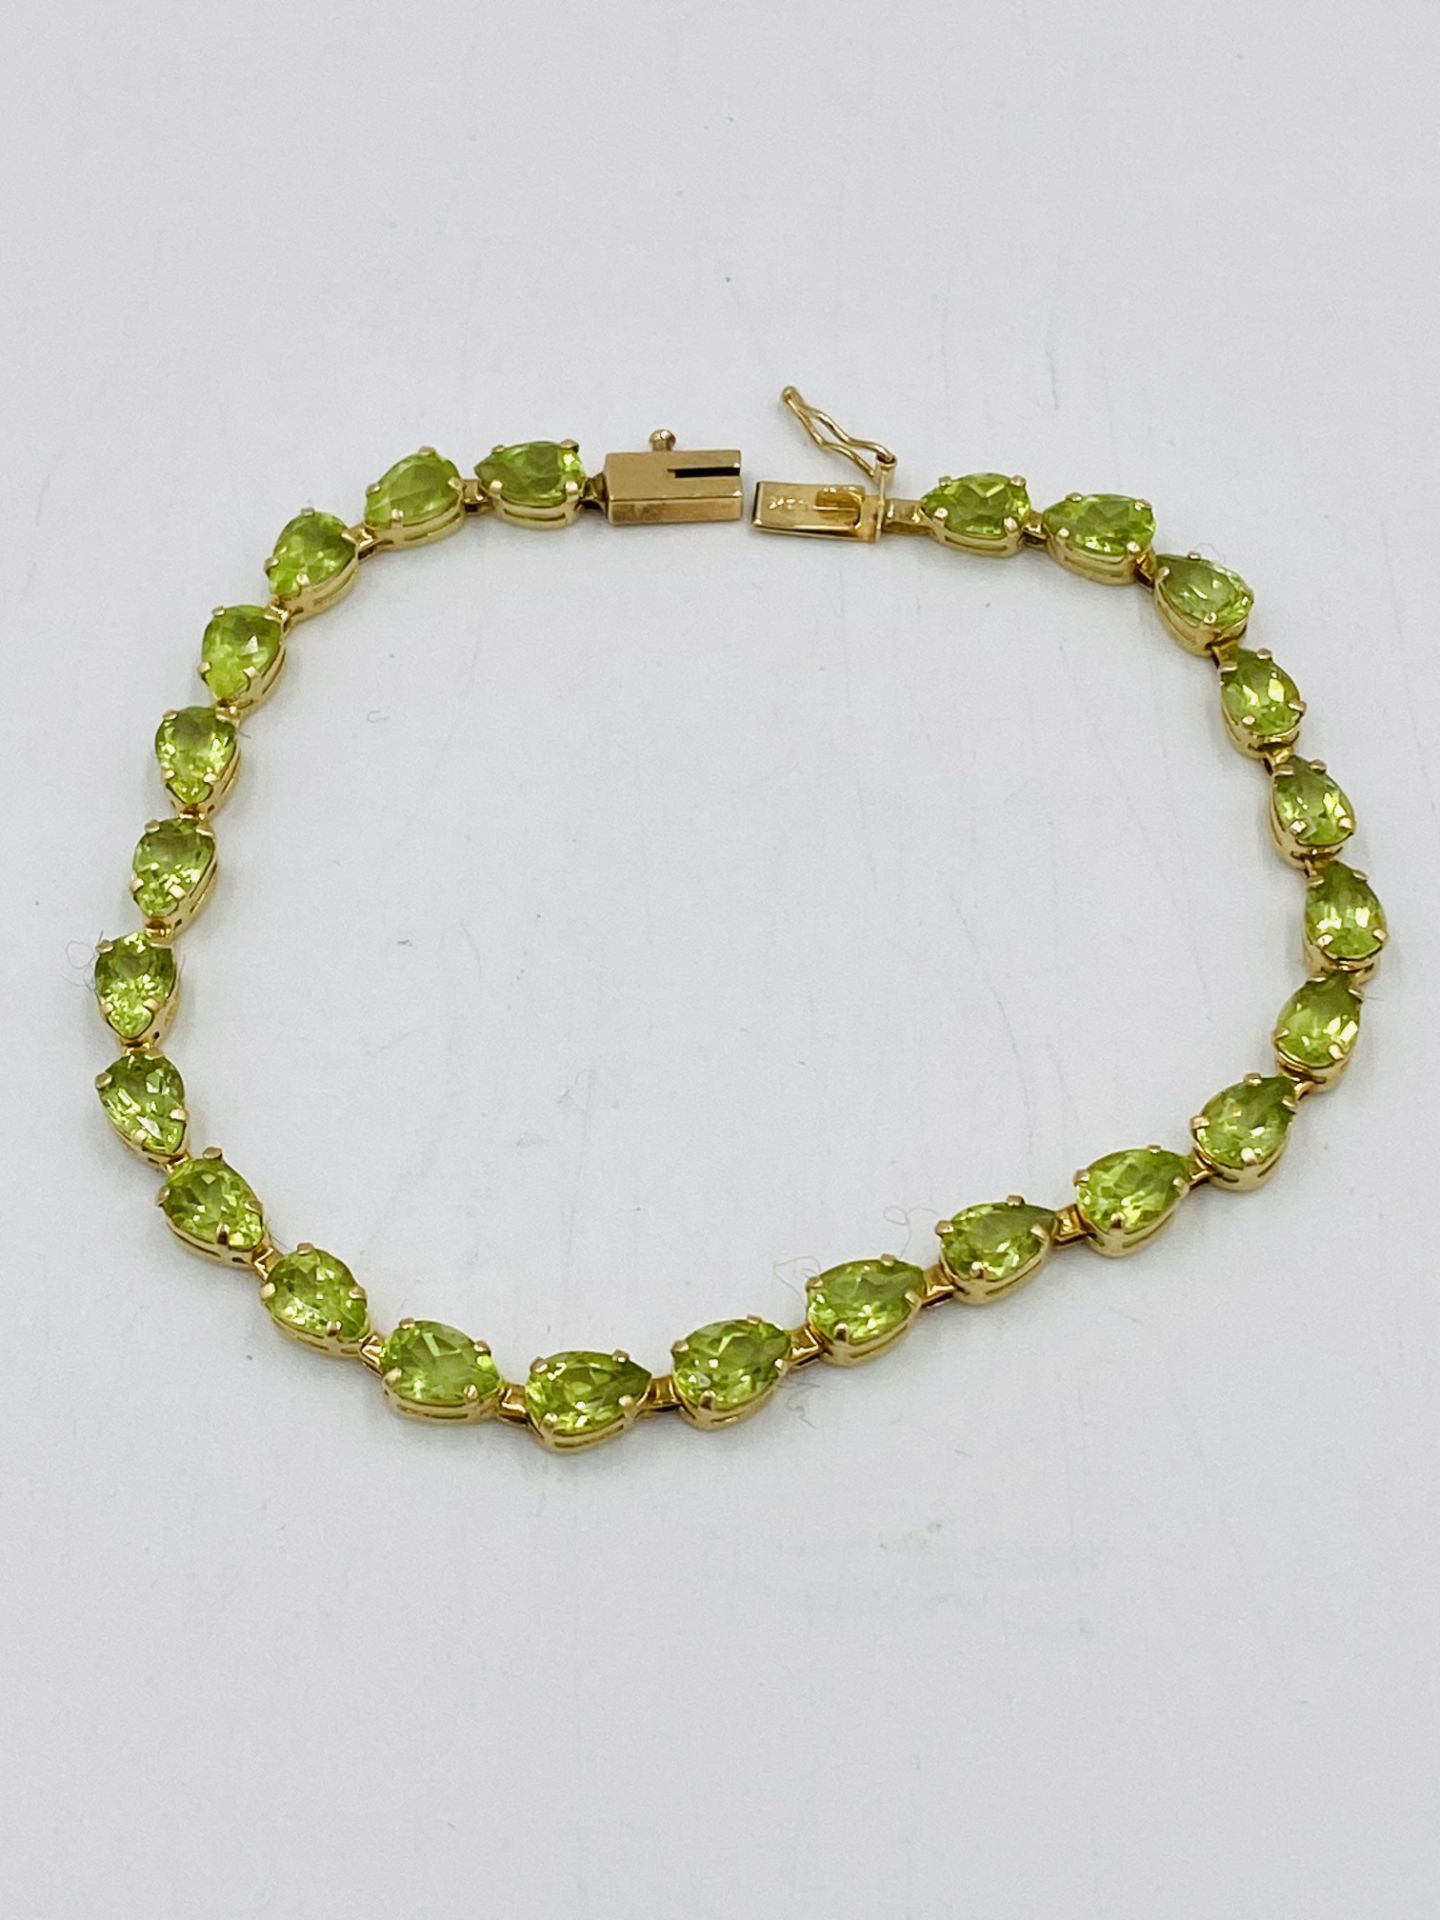 14ct gold bracelet set with green stones